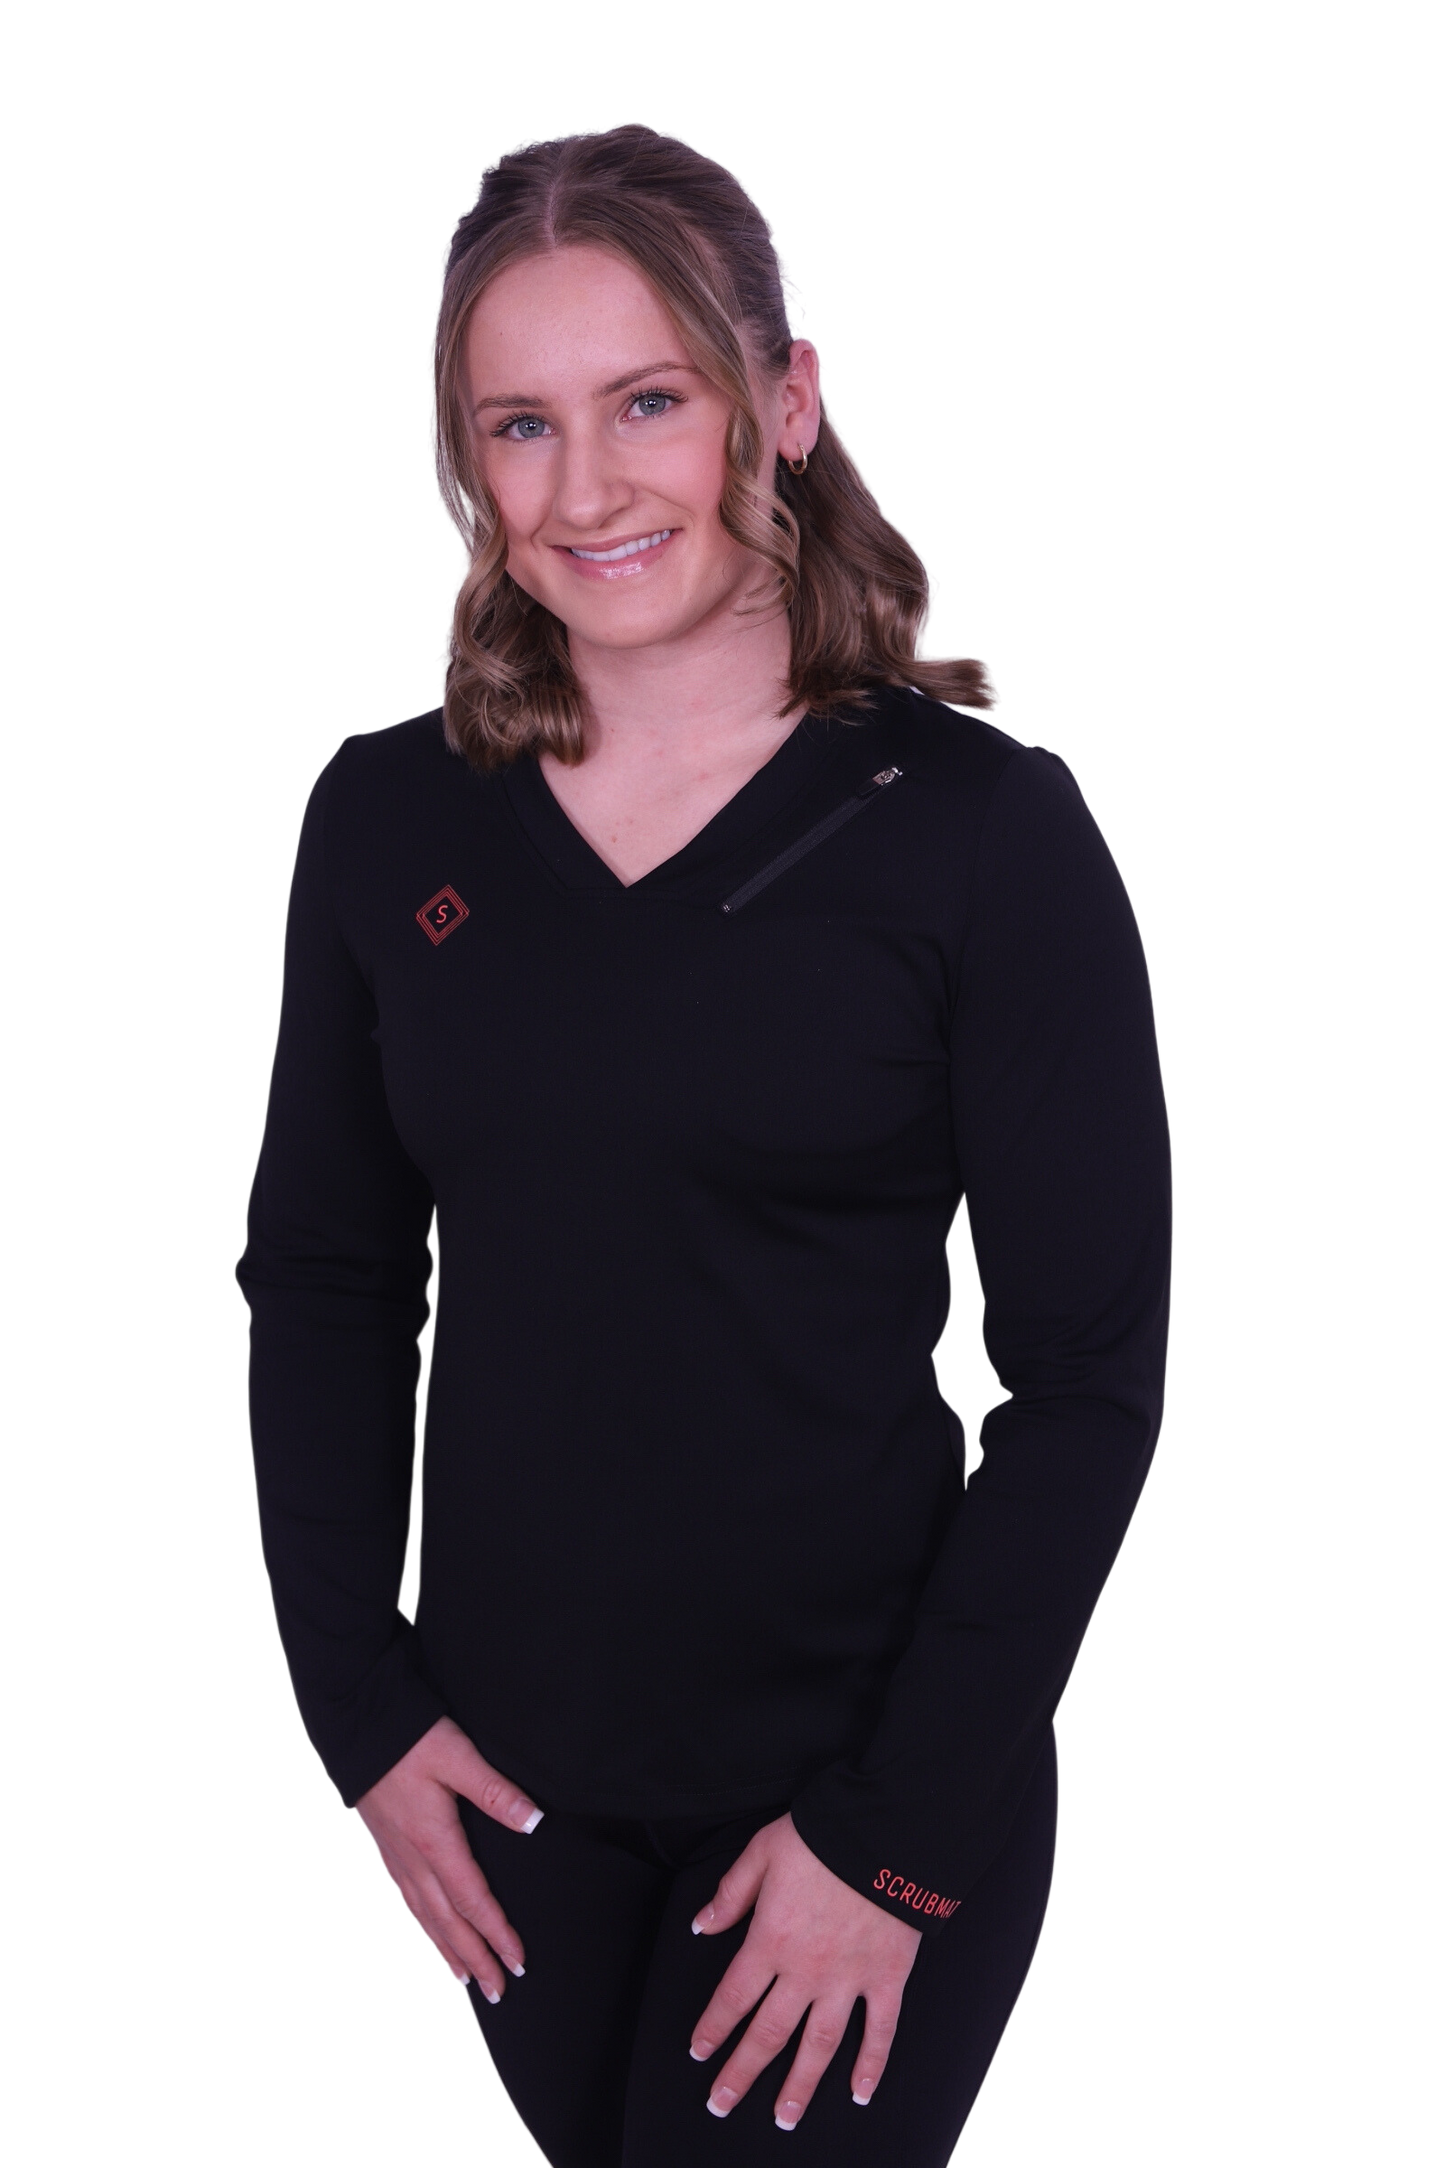 GT Performance Womens Medical Underscrub T-Shirt Long Sleeve Tee-2  Pack-Black/White-X-Large